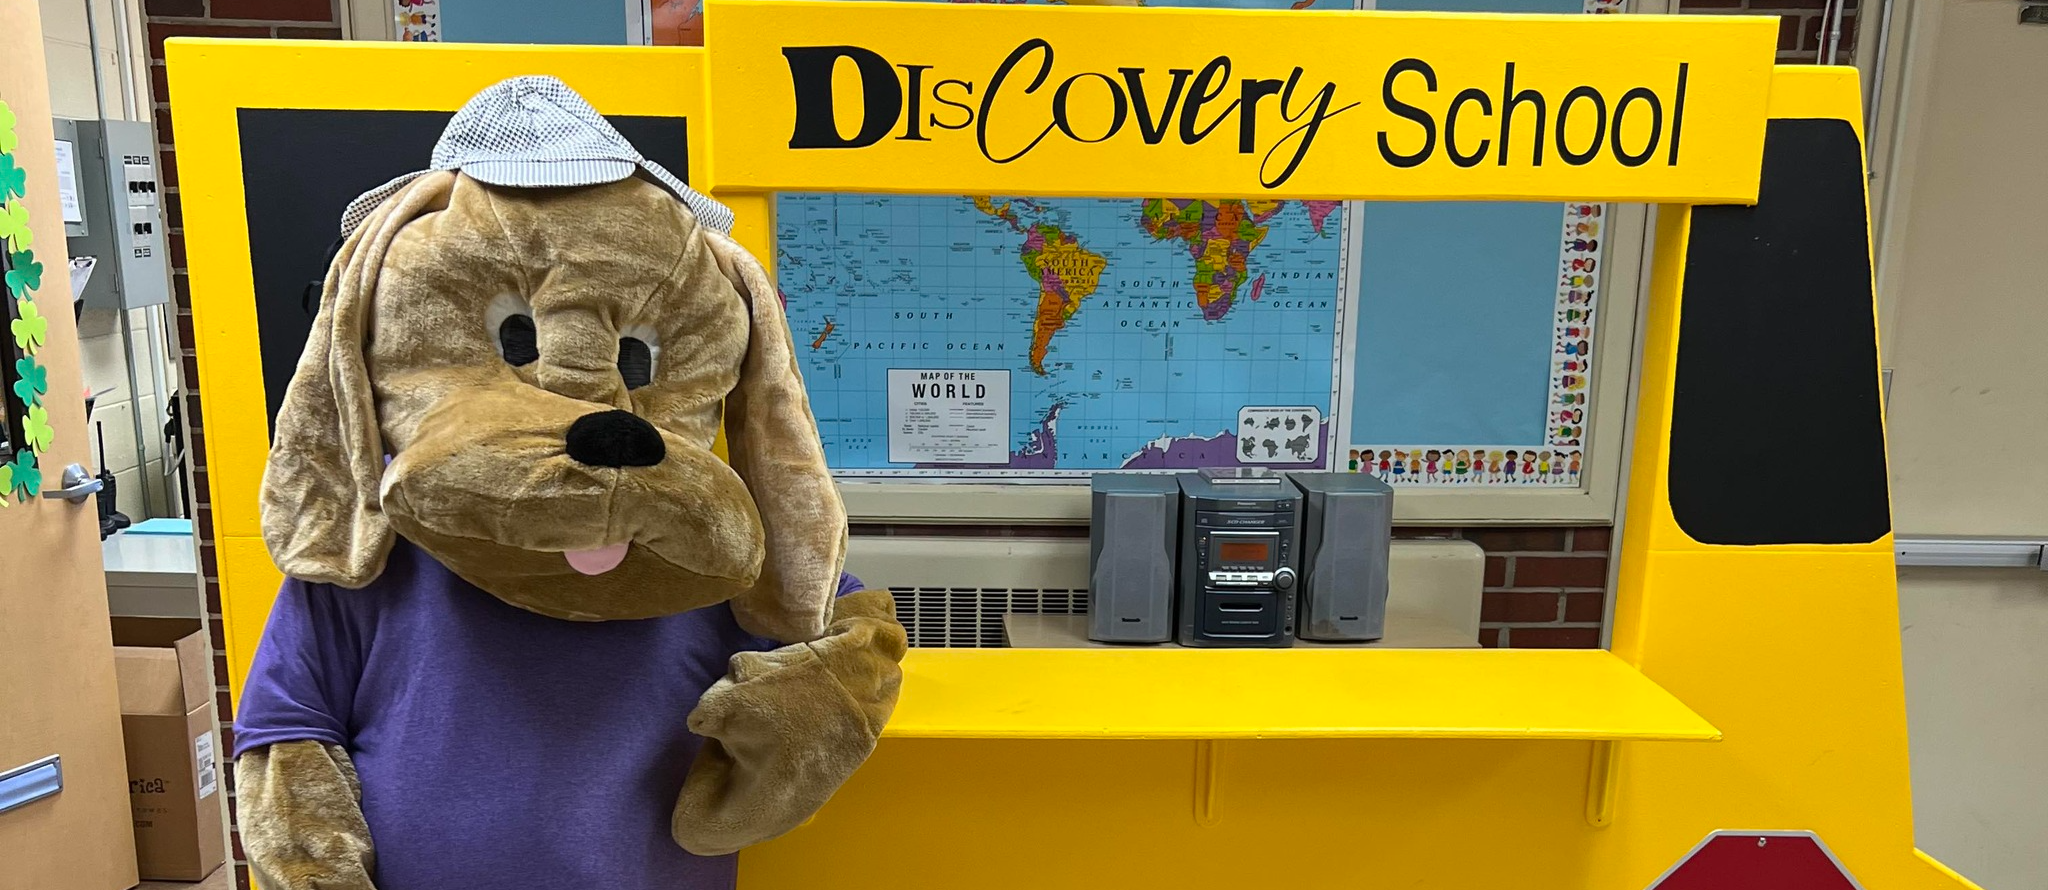 Mascot in front of school bus in office